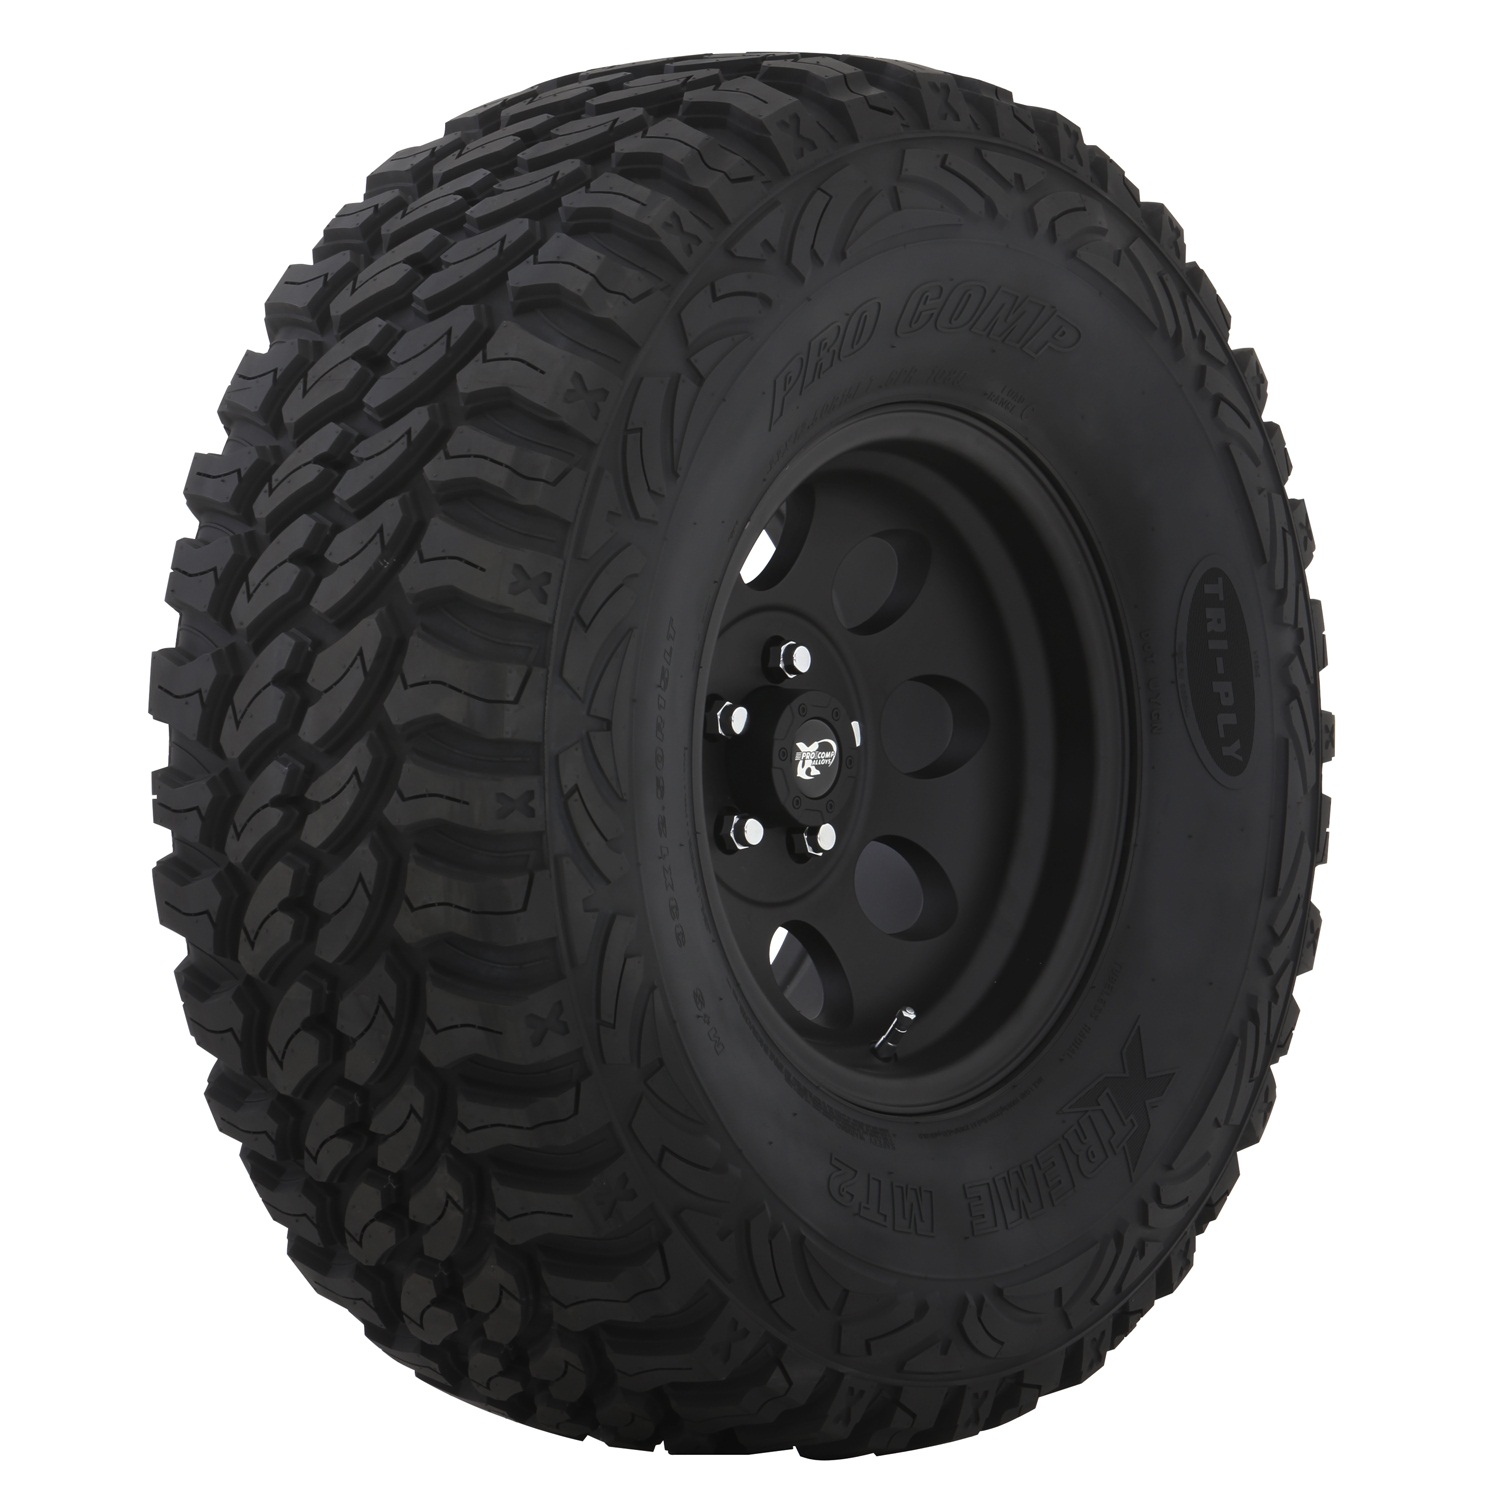 Pro Comp Tires Pro Comp Tires 771237 Pro Comp Xtreme Mud Terrain 2; Tire